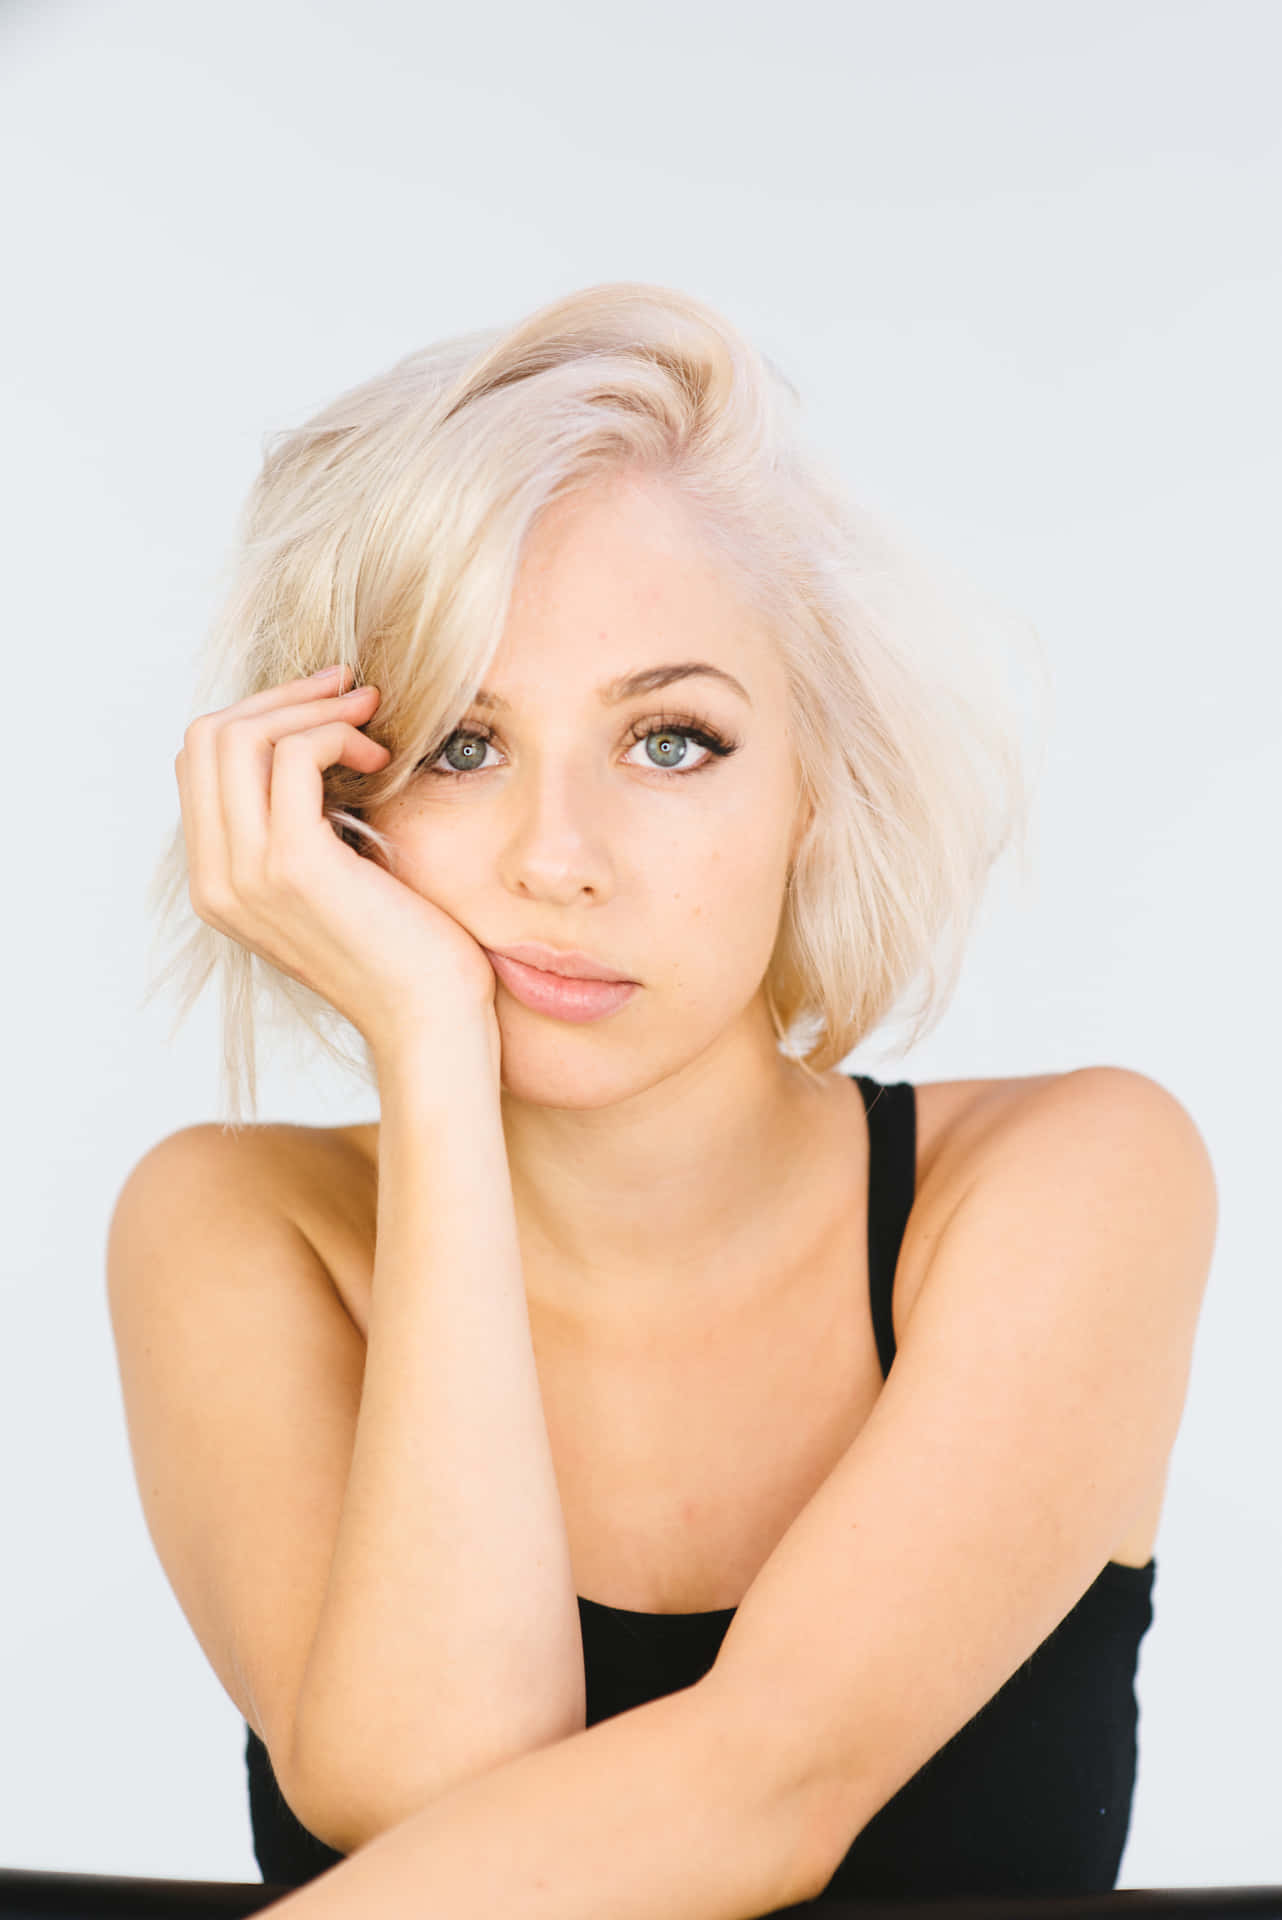 Blonde Woman Pensive Pose Wallpaper